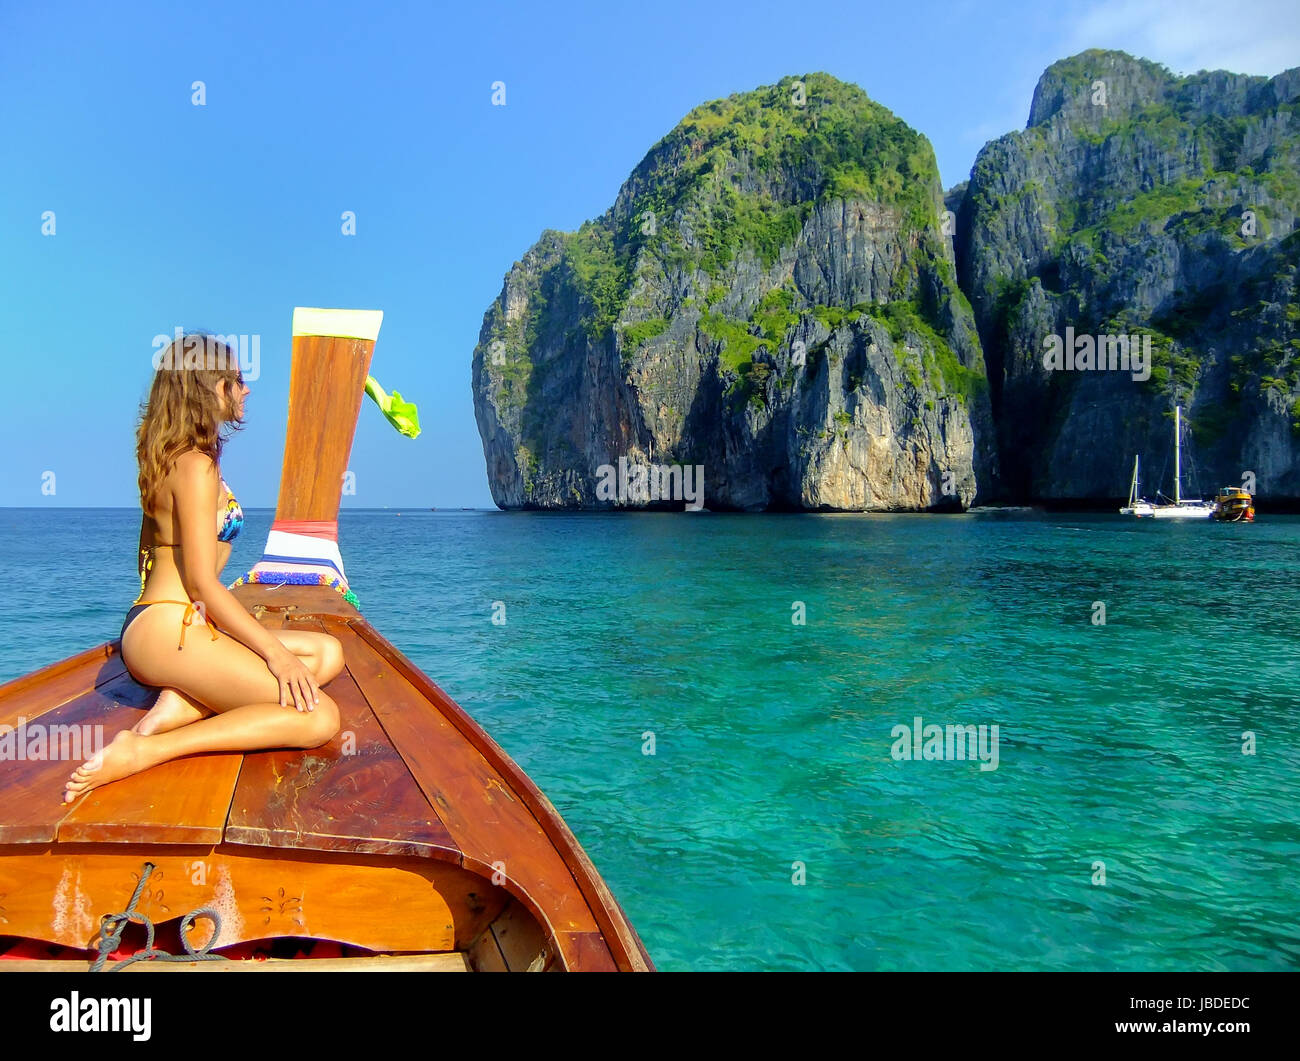 Junge Frau sitzt an der Vorderseite des Longtail-Boot in der Maya Bay auf Phi Phi Leh Island, Provinz Krabi, Thailand. Phi Phi Leh ist Teil des Mu Ko Phi Phi Na Stockfoto